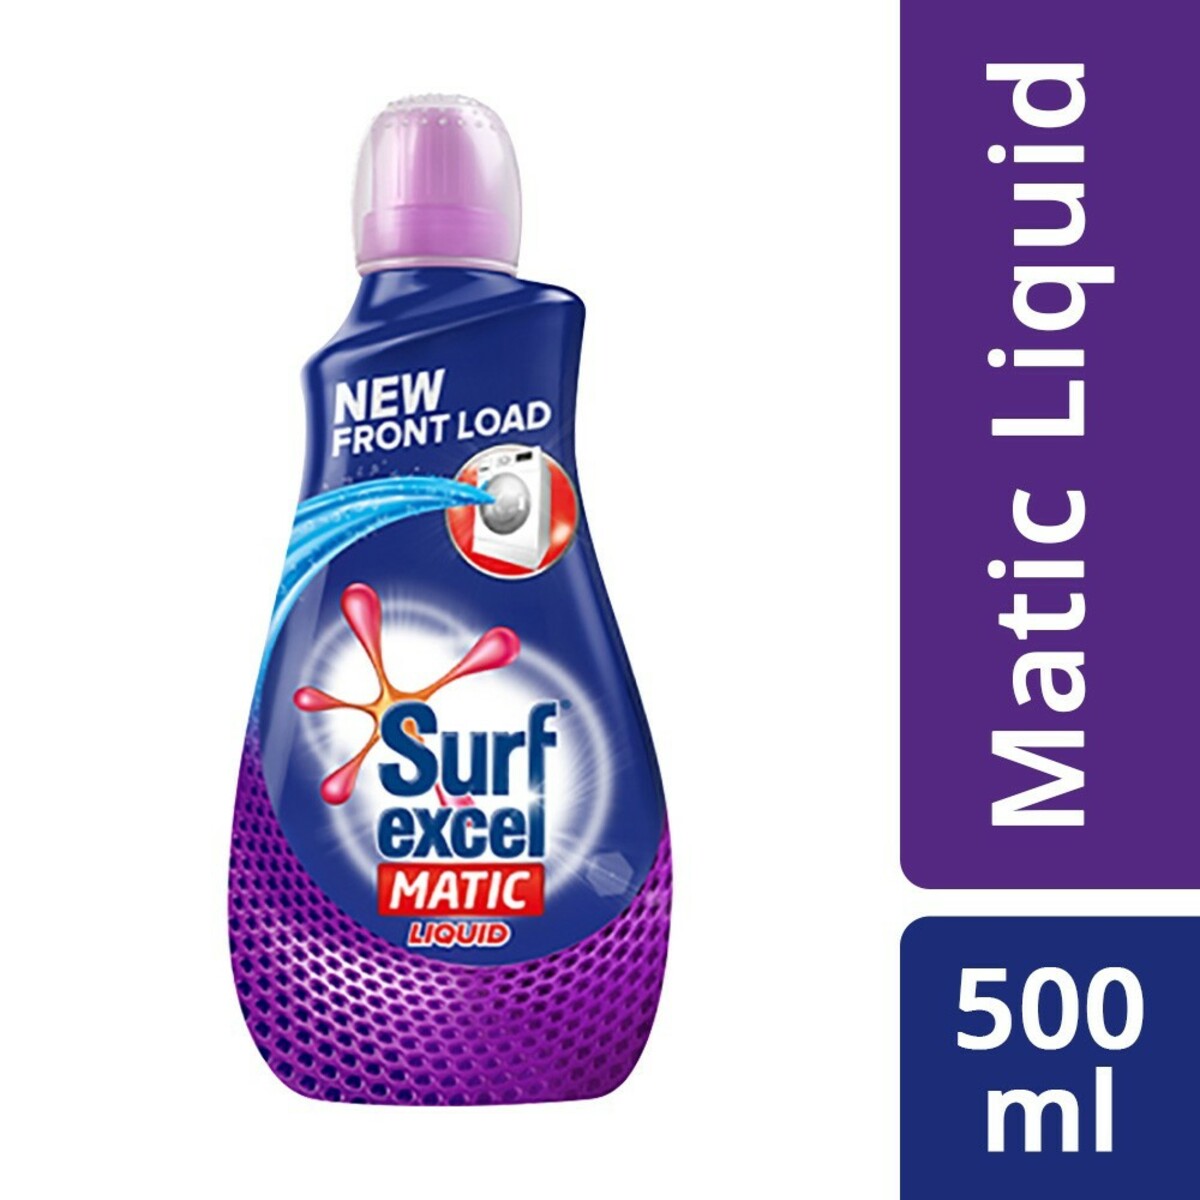 Surf Excel Matic Front Load Liquid 500ml